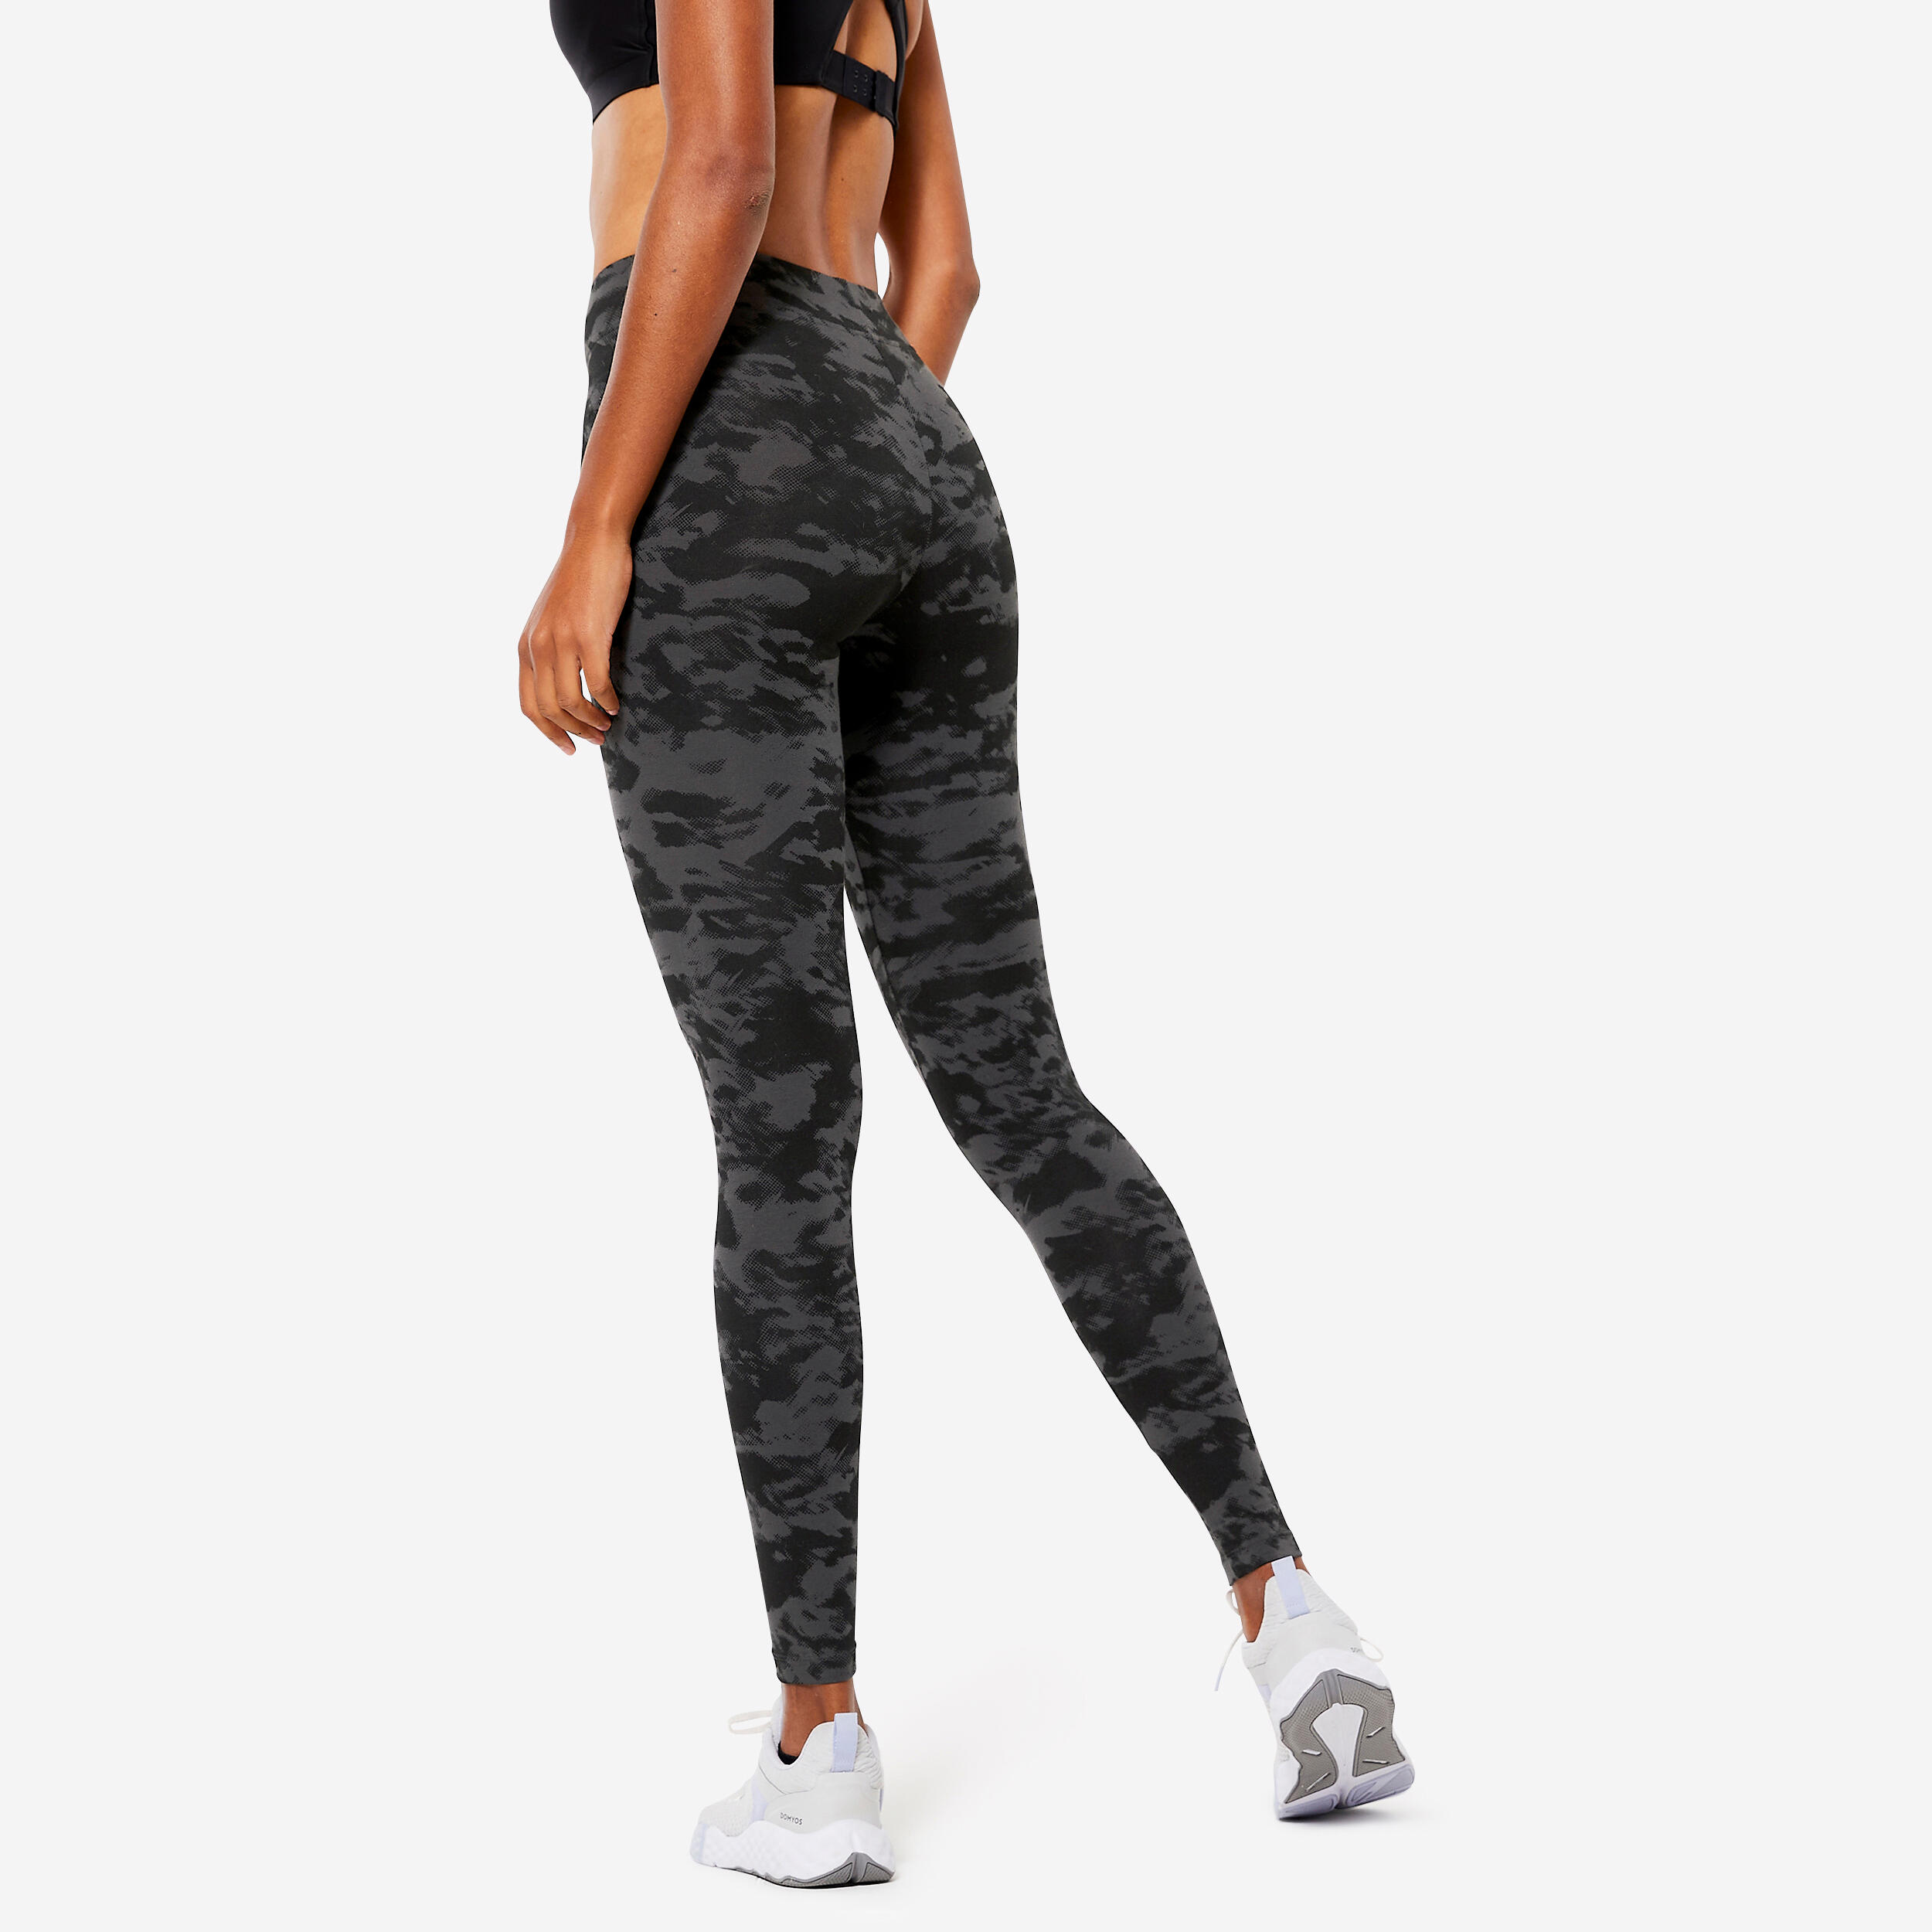 Women's Slim-Fit Fitness Leggings Fit+ 500 - Black Print 5/6